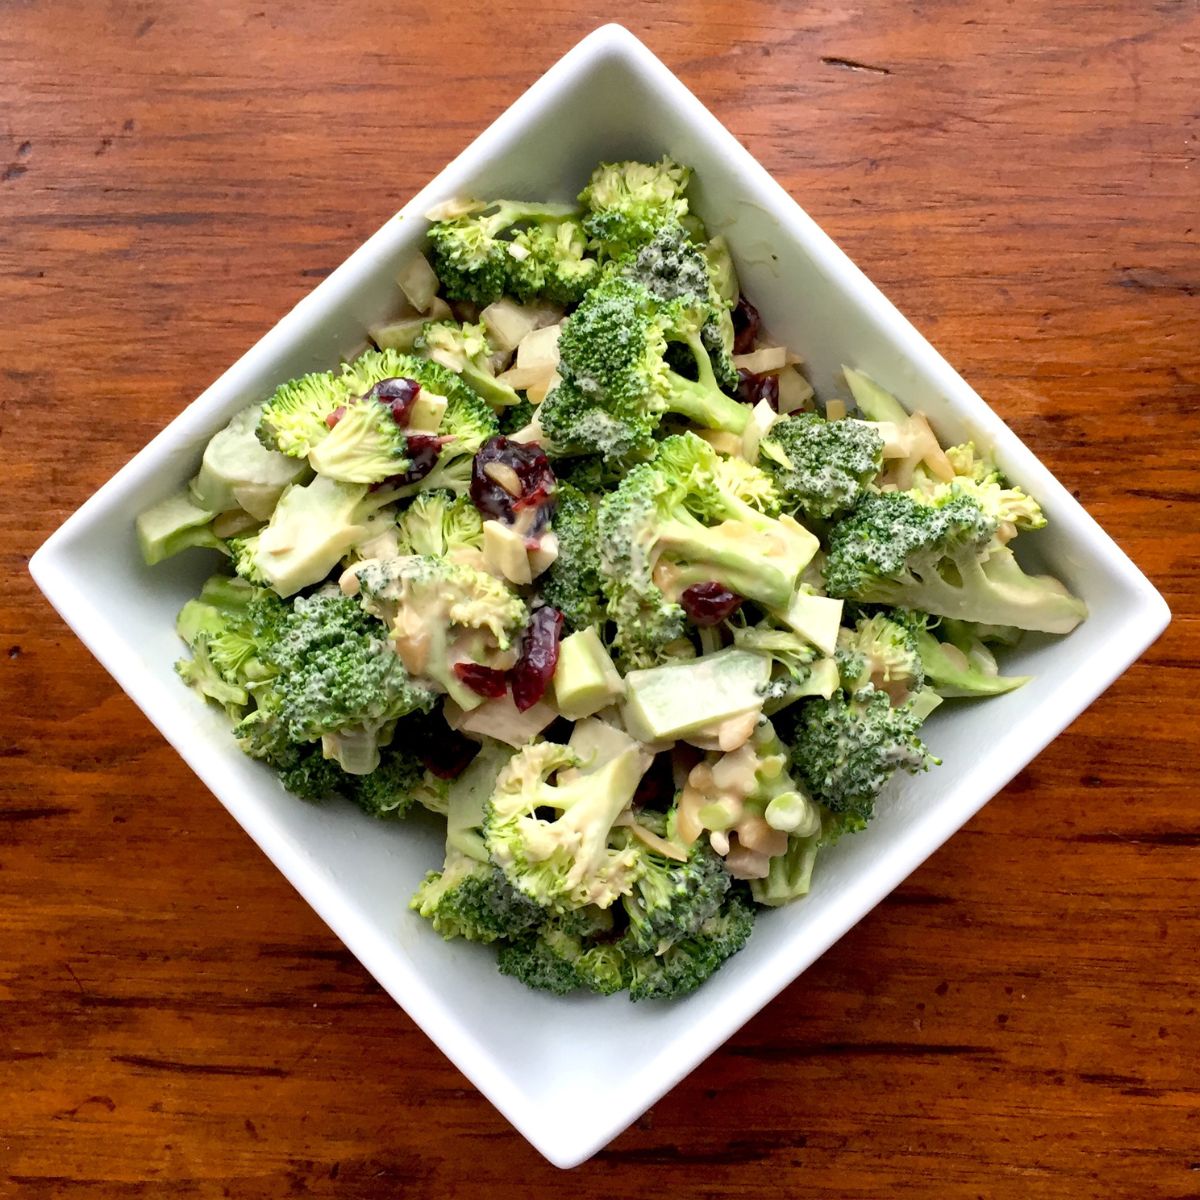 Broccoli salad with raisins and almonds.